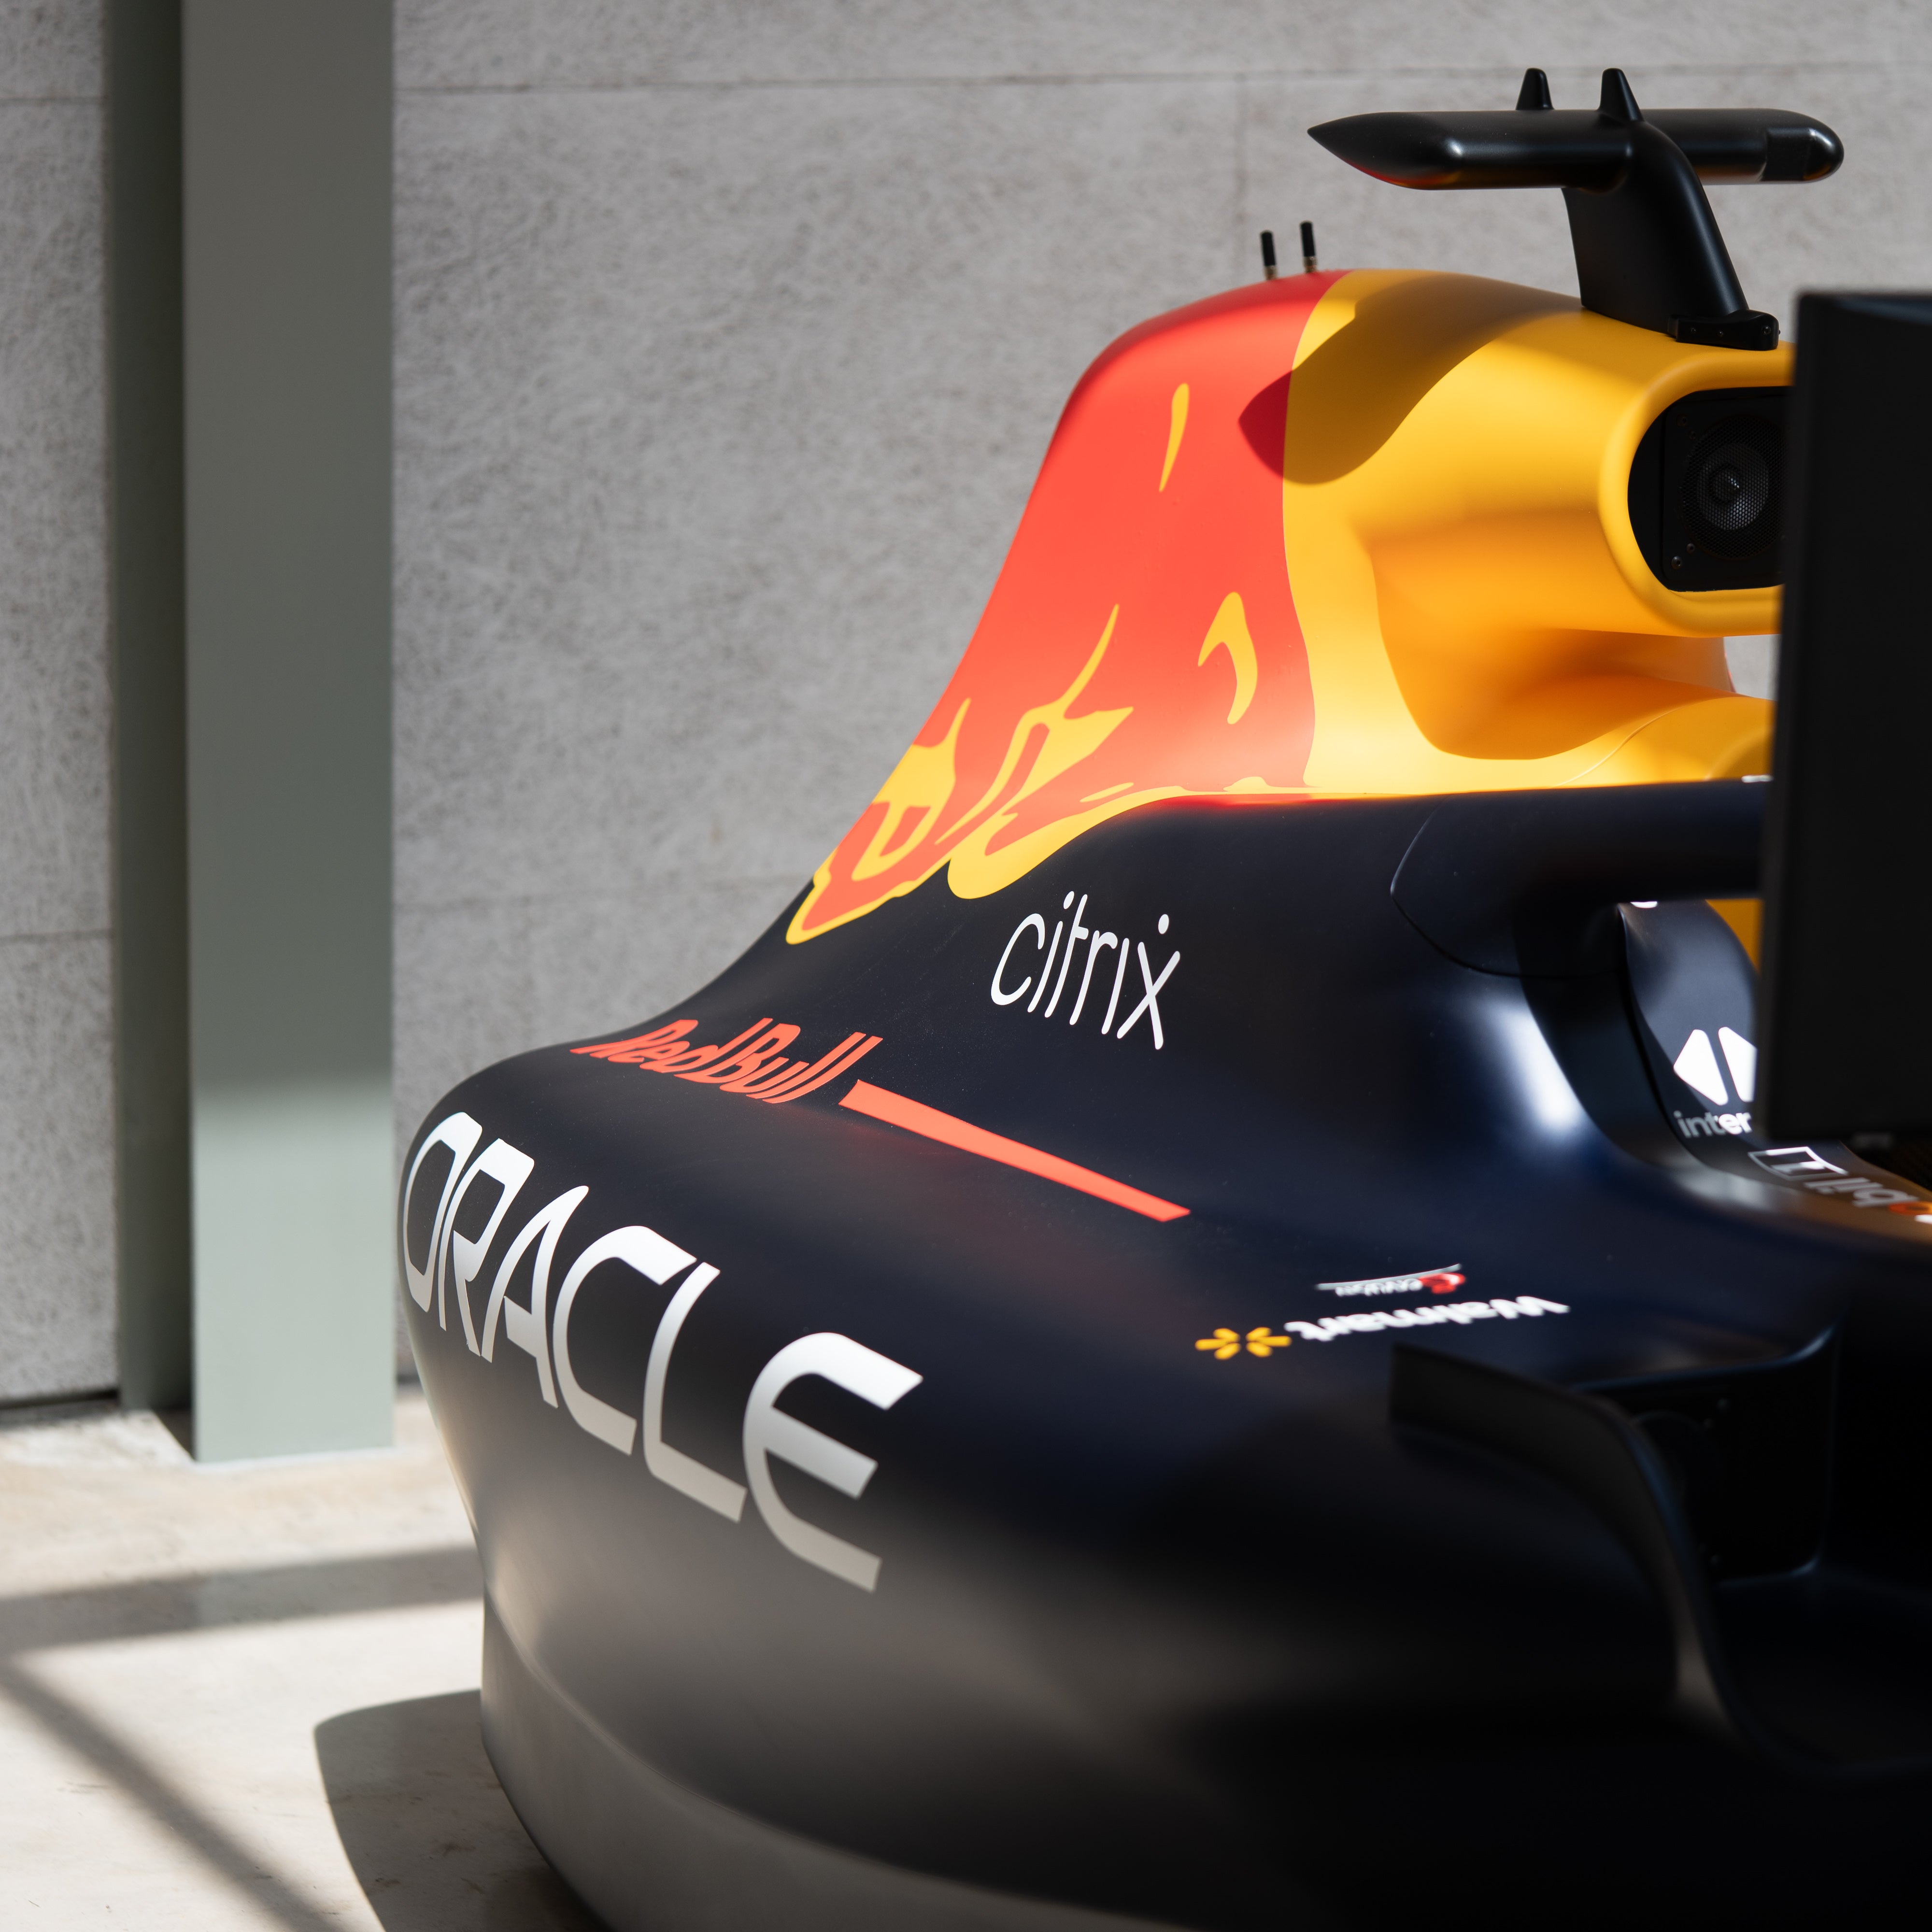 Red Bull F1 sim rig is a £100k toy, FOS Future Lab